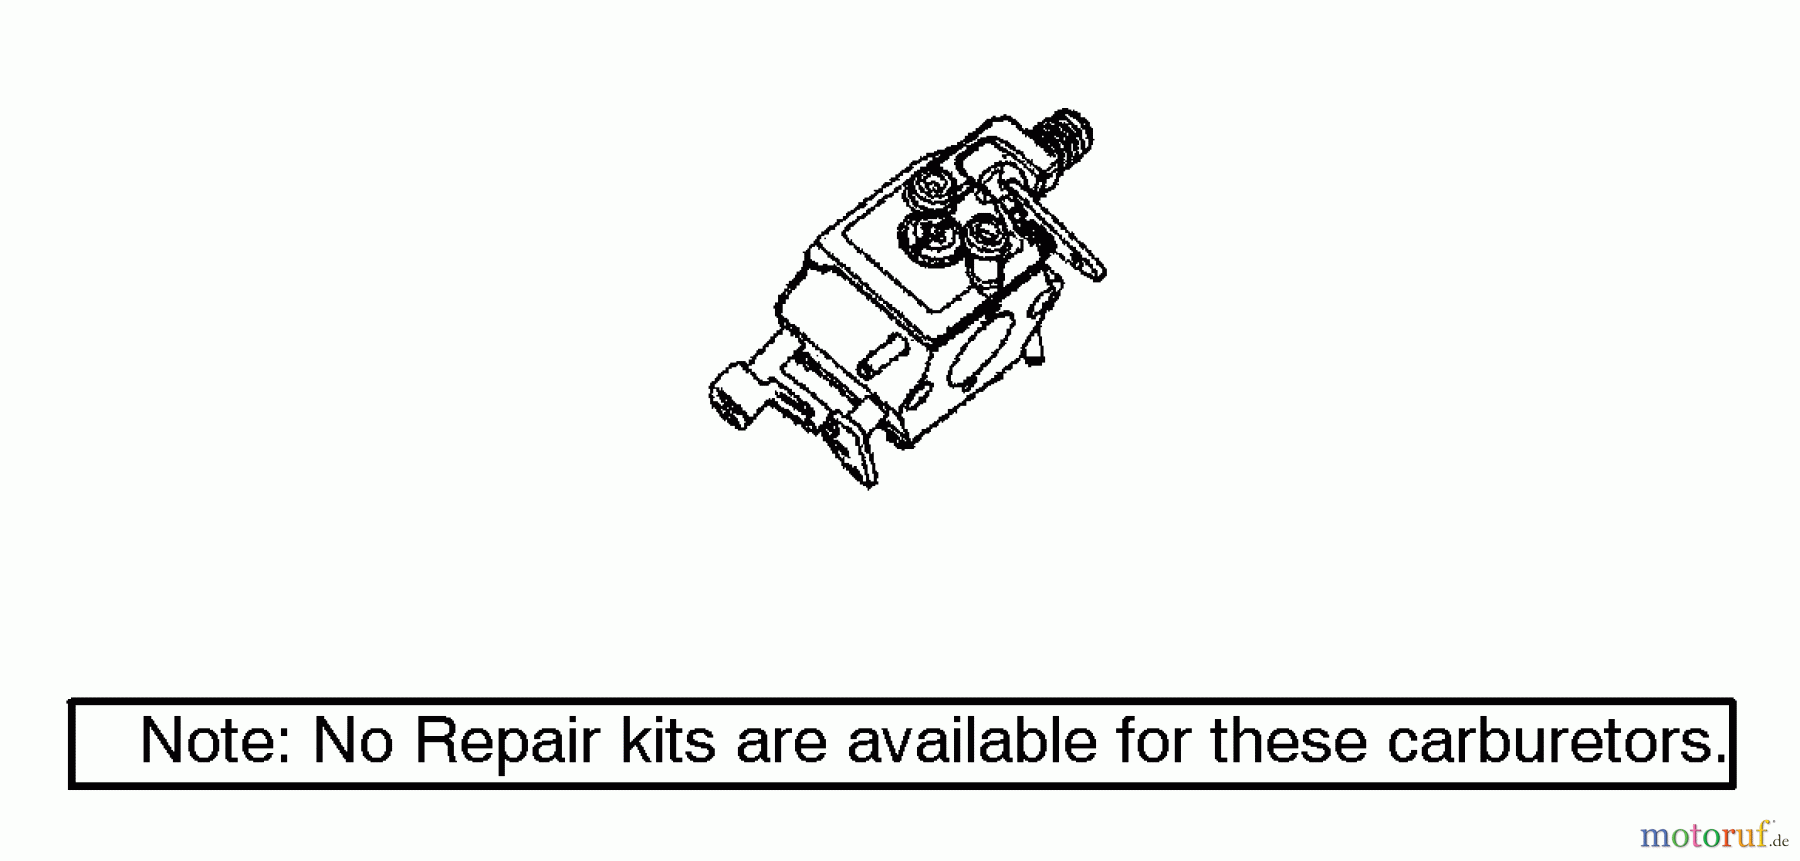  Poulan / Weed Eater Motorsägen 2150 (Type 4) - Poulan Woodshark / Woodsman Chainsaw Carburetor Assembly Kits 530071620/530071820/530071821